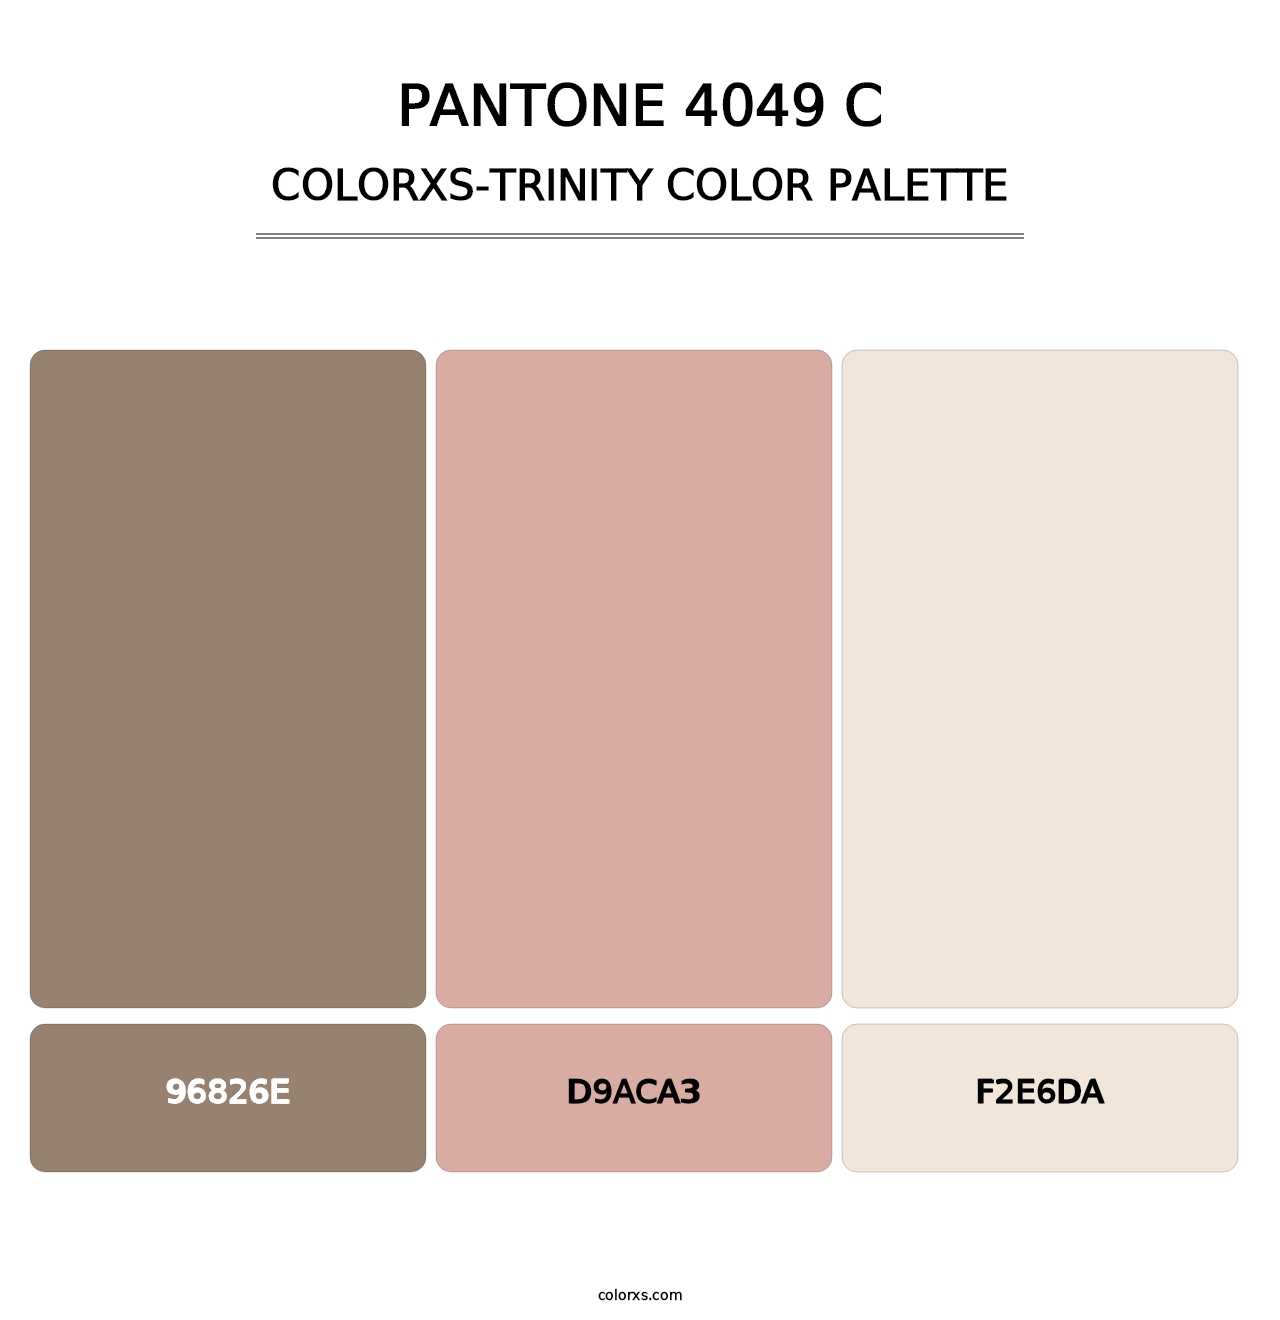 PANTONE 4049 C - Colorxs Trinity Palette